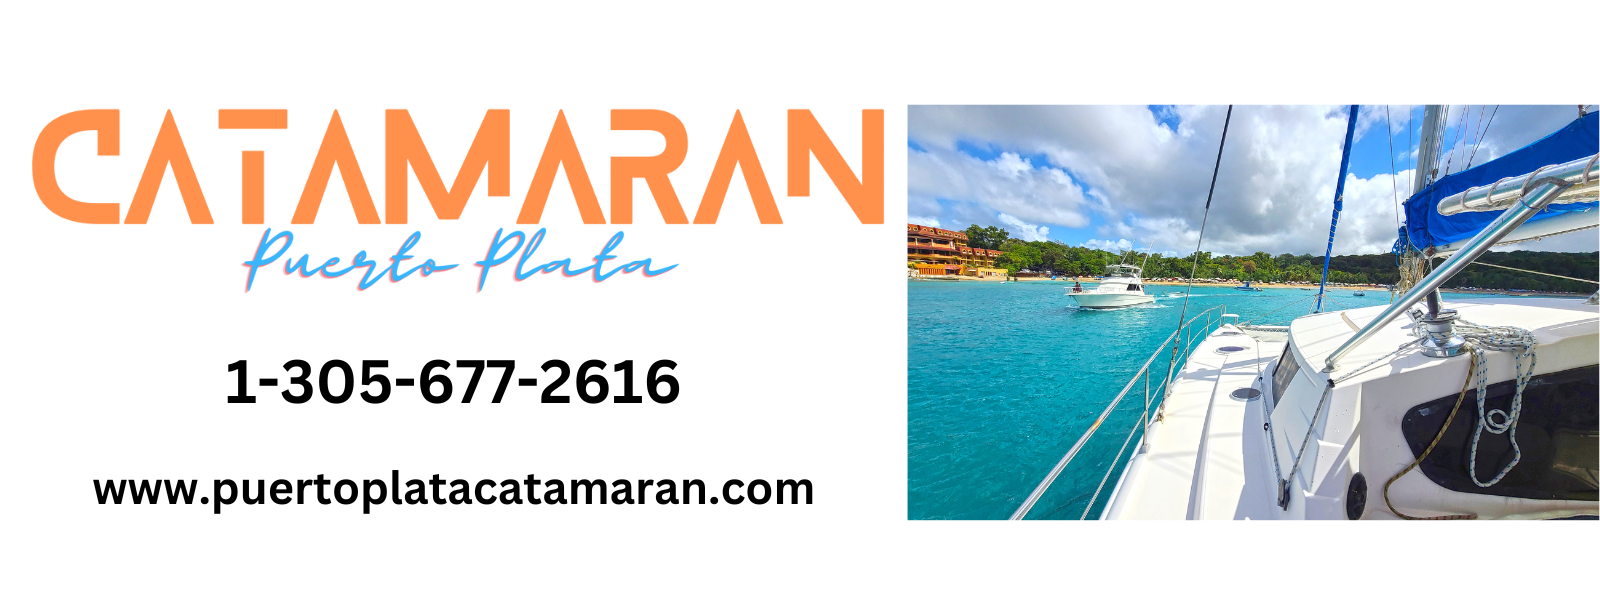 puerto plata catamaran tour packages